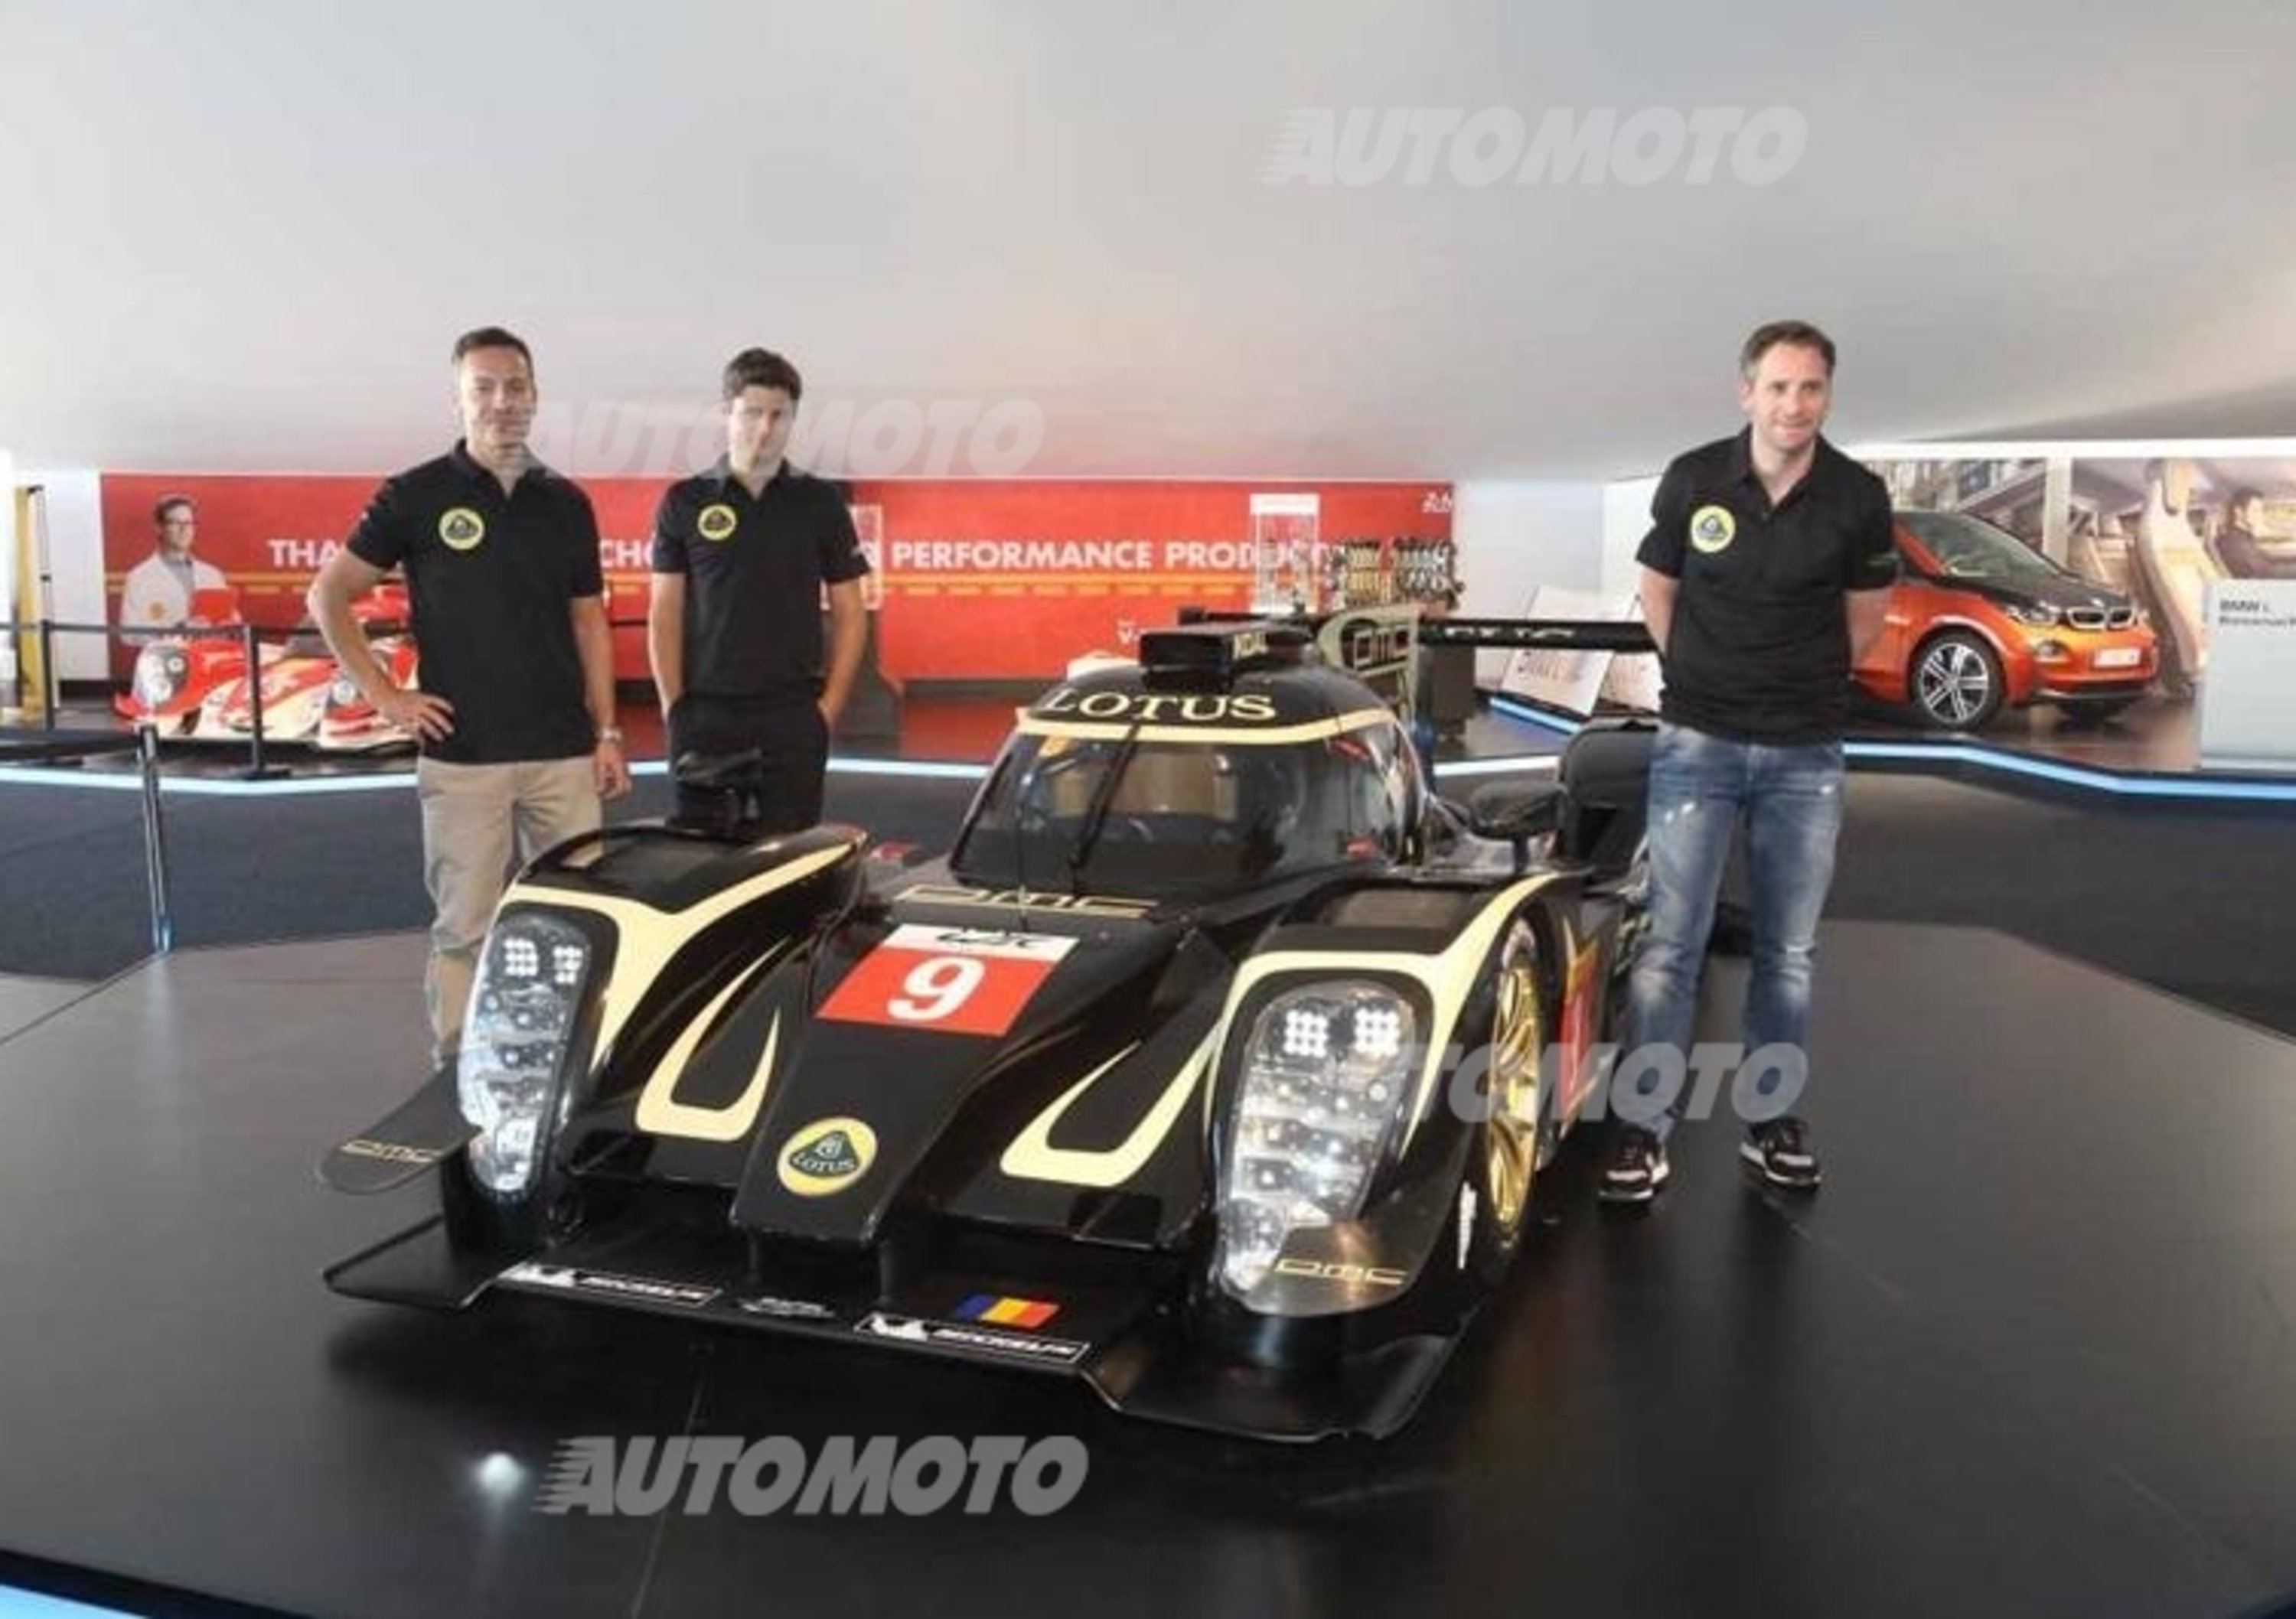 Lotus P1/01: presentata a Le Mans la LMP1 per il WEC